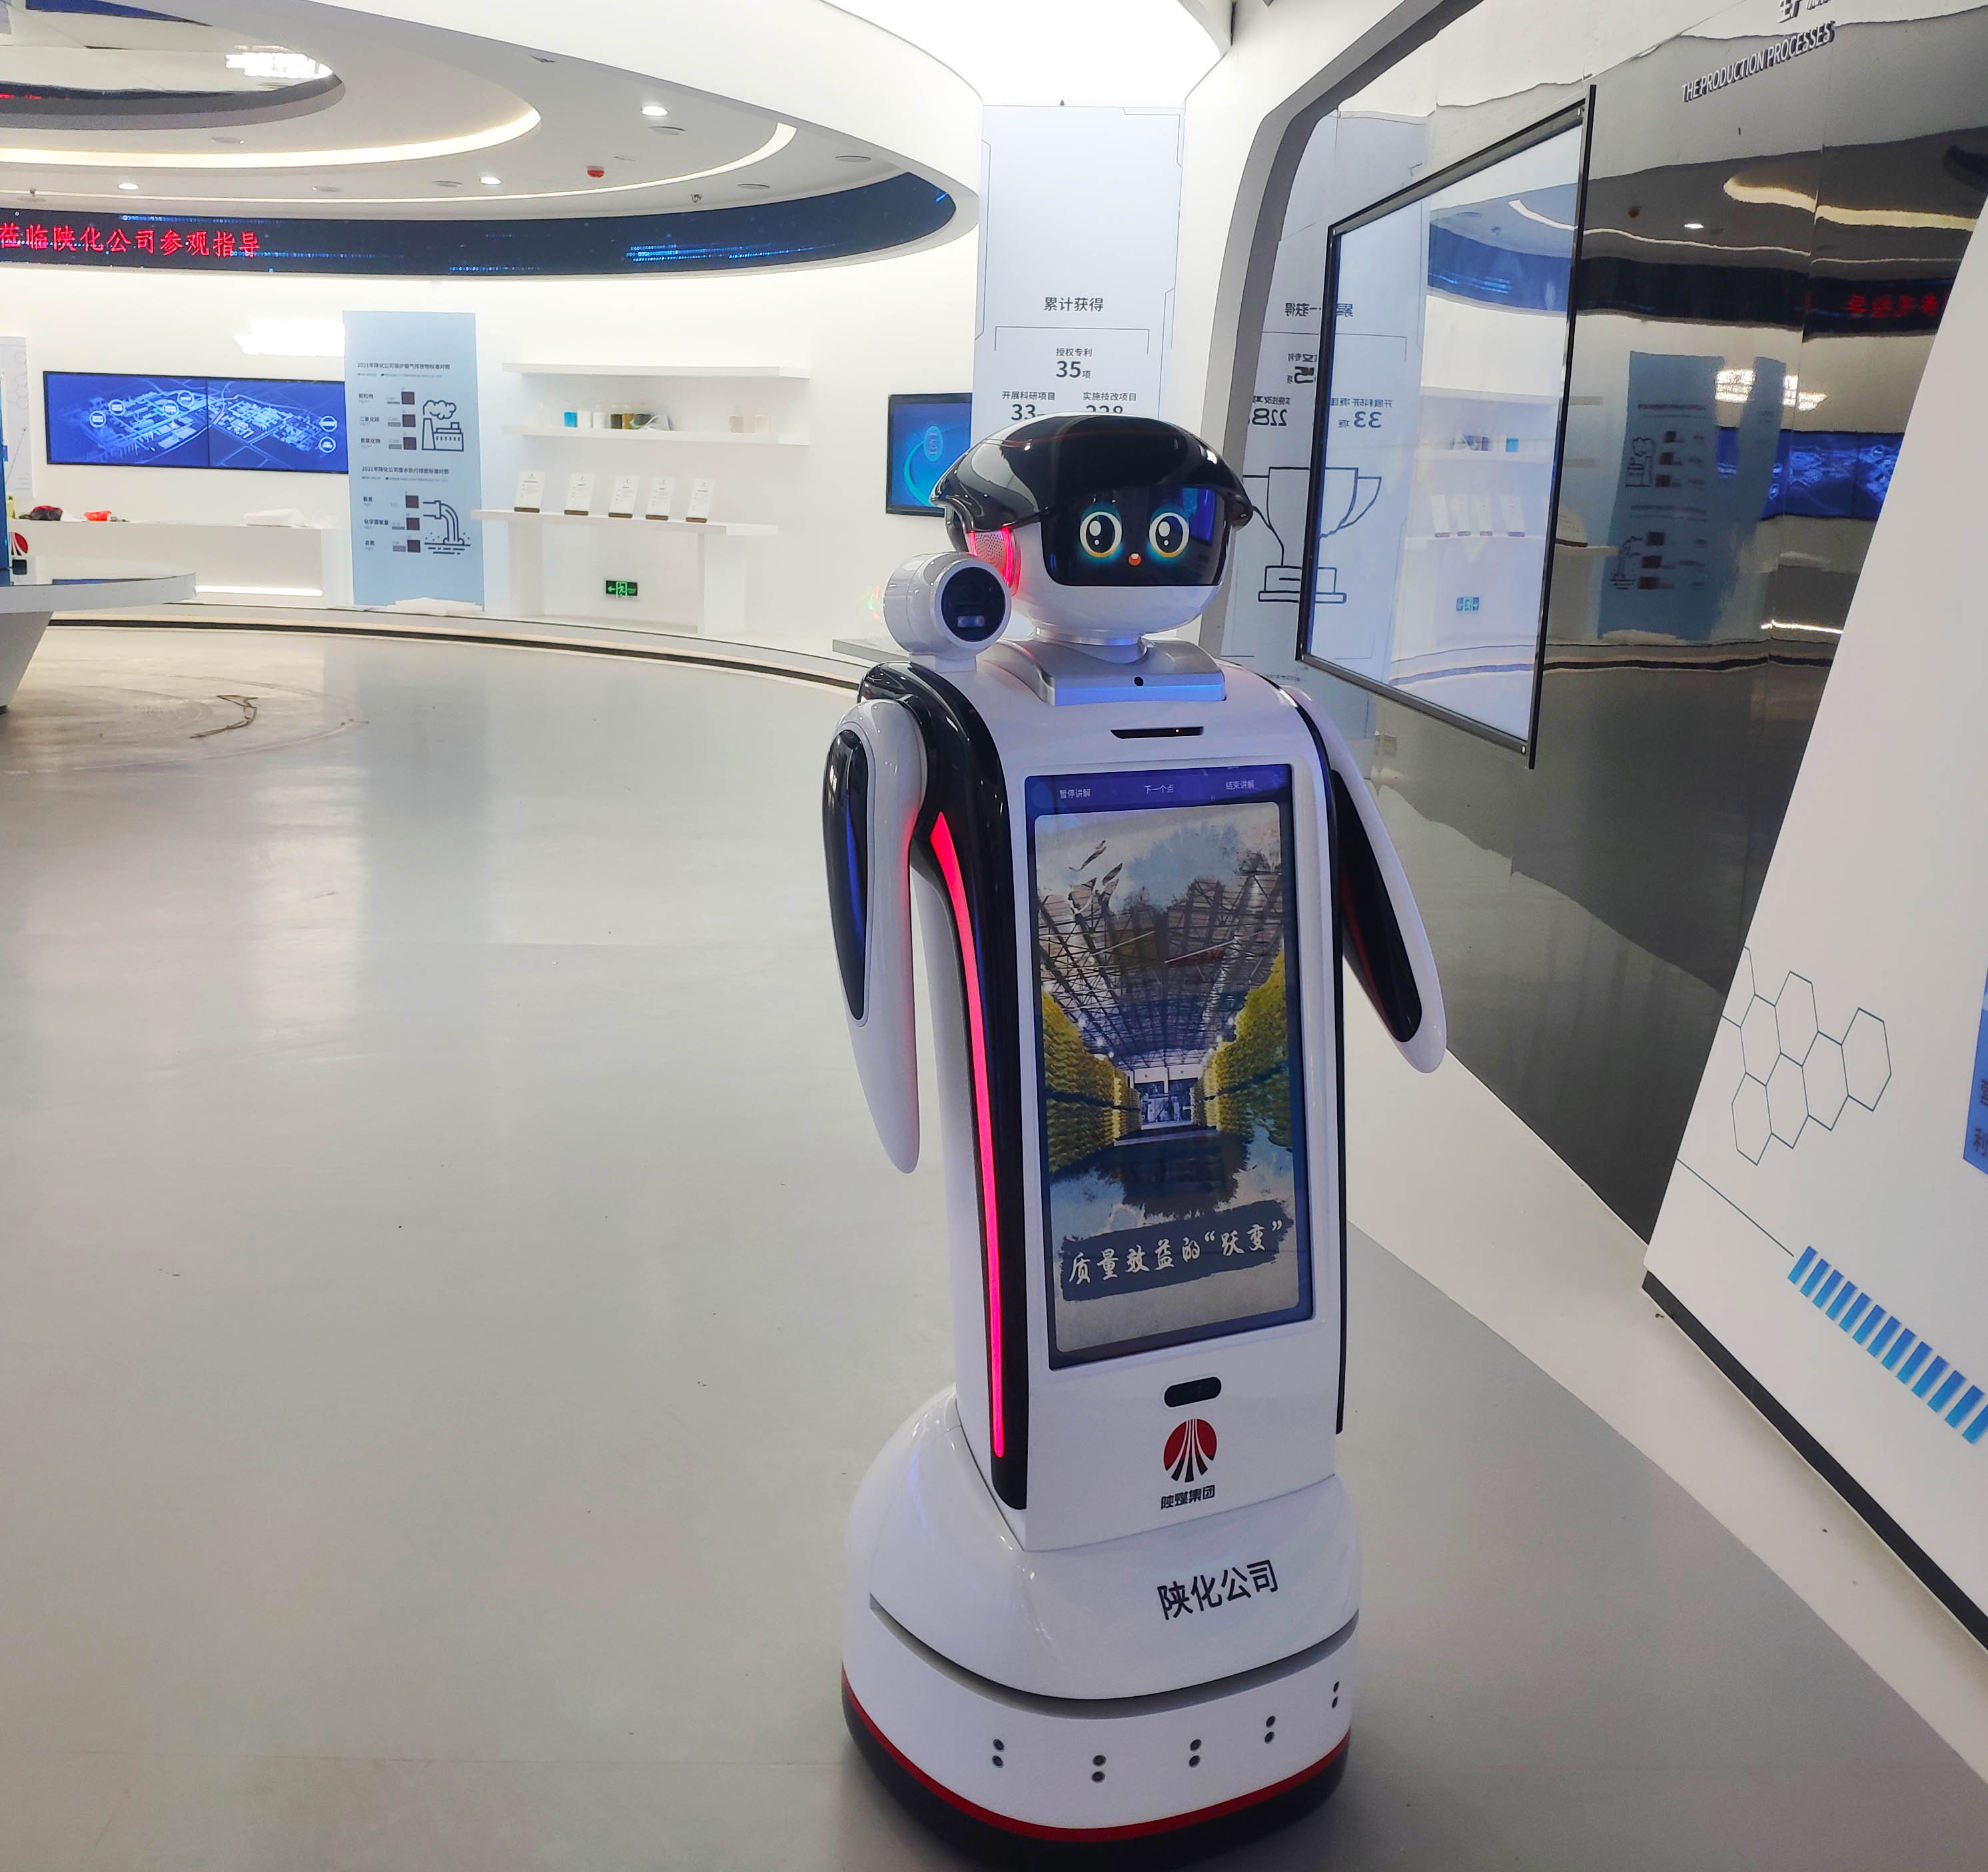 BOB体育综合官方平台 企业接待机器人